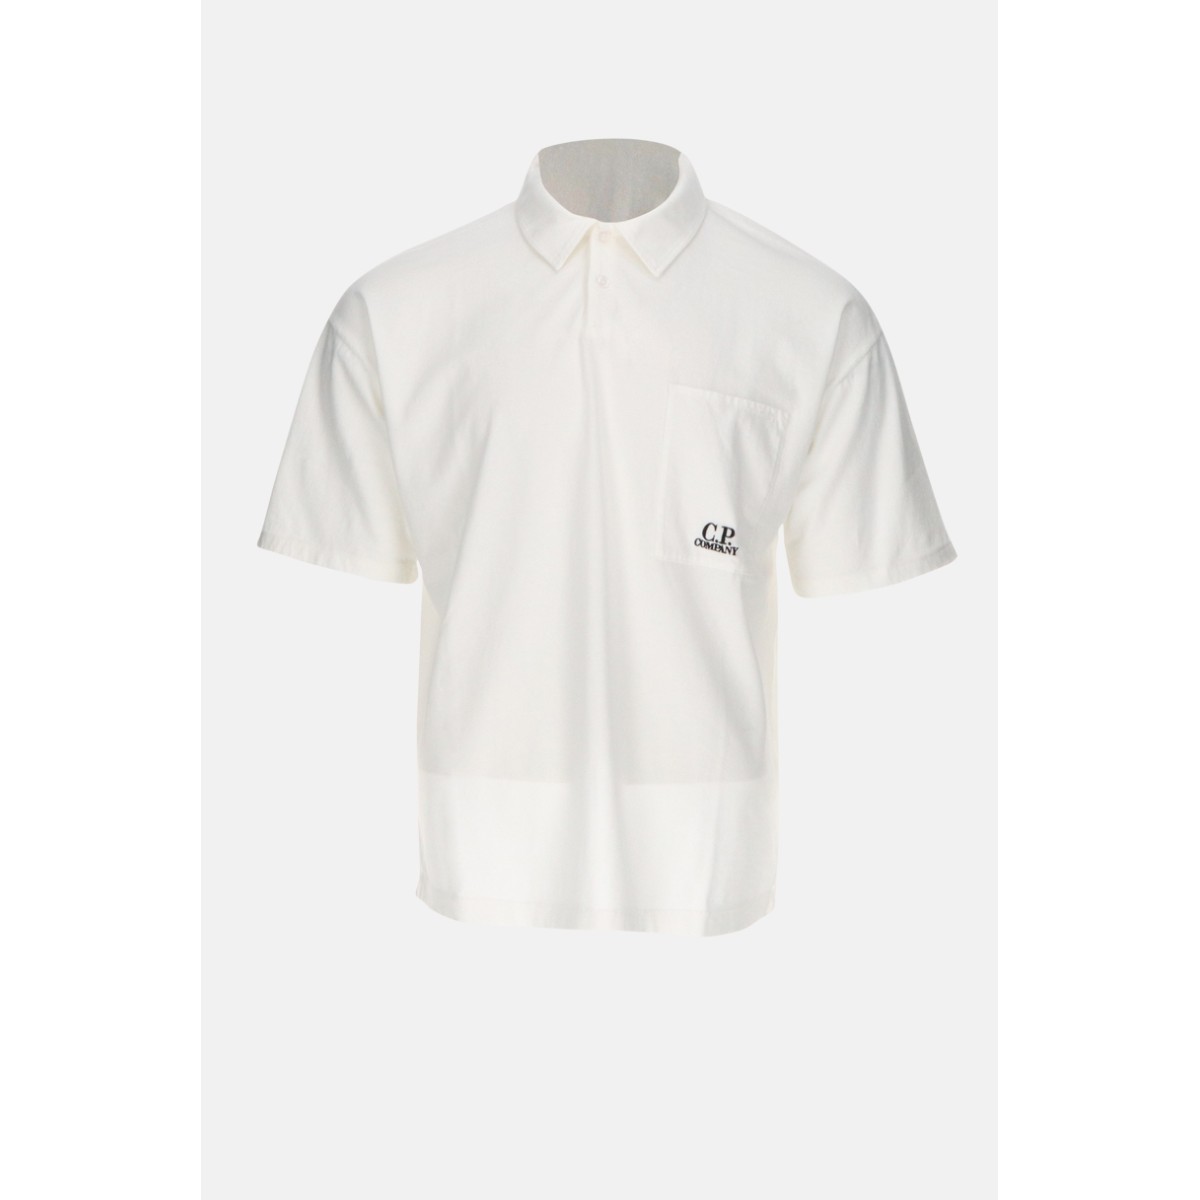 Short-sleeved polo shirt from C.P. Company